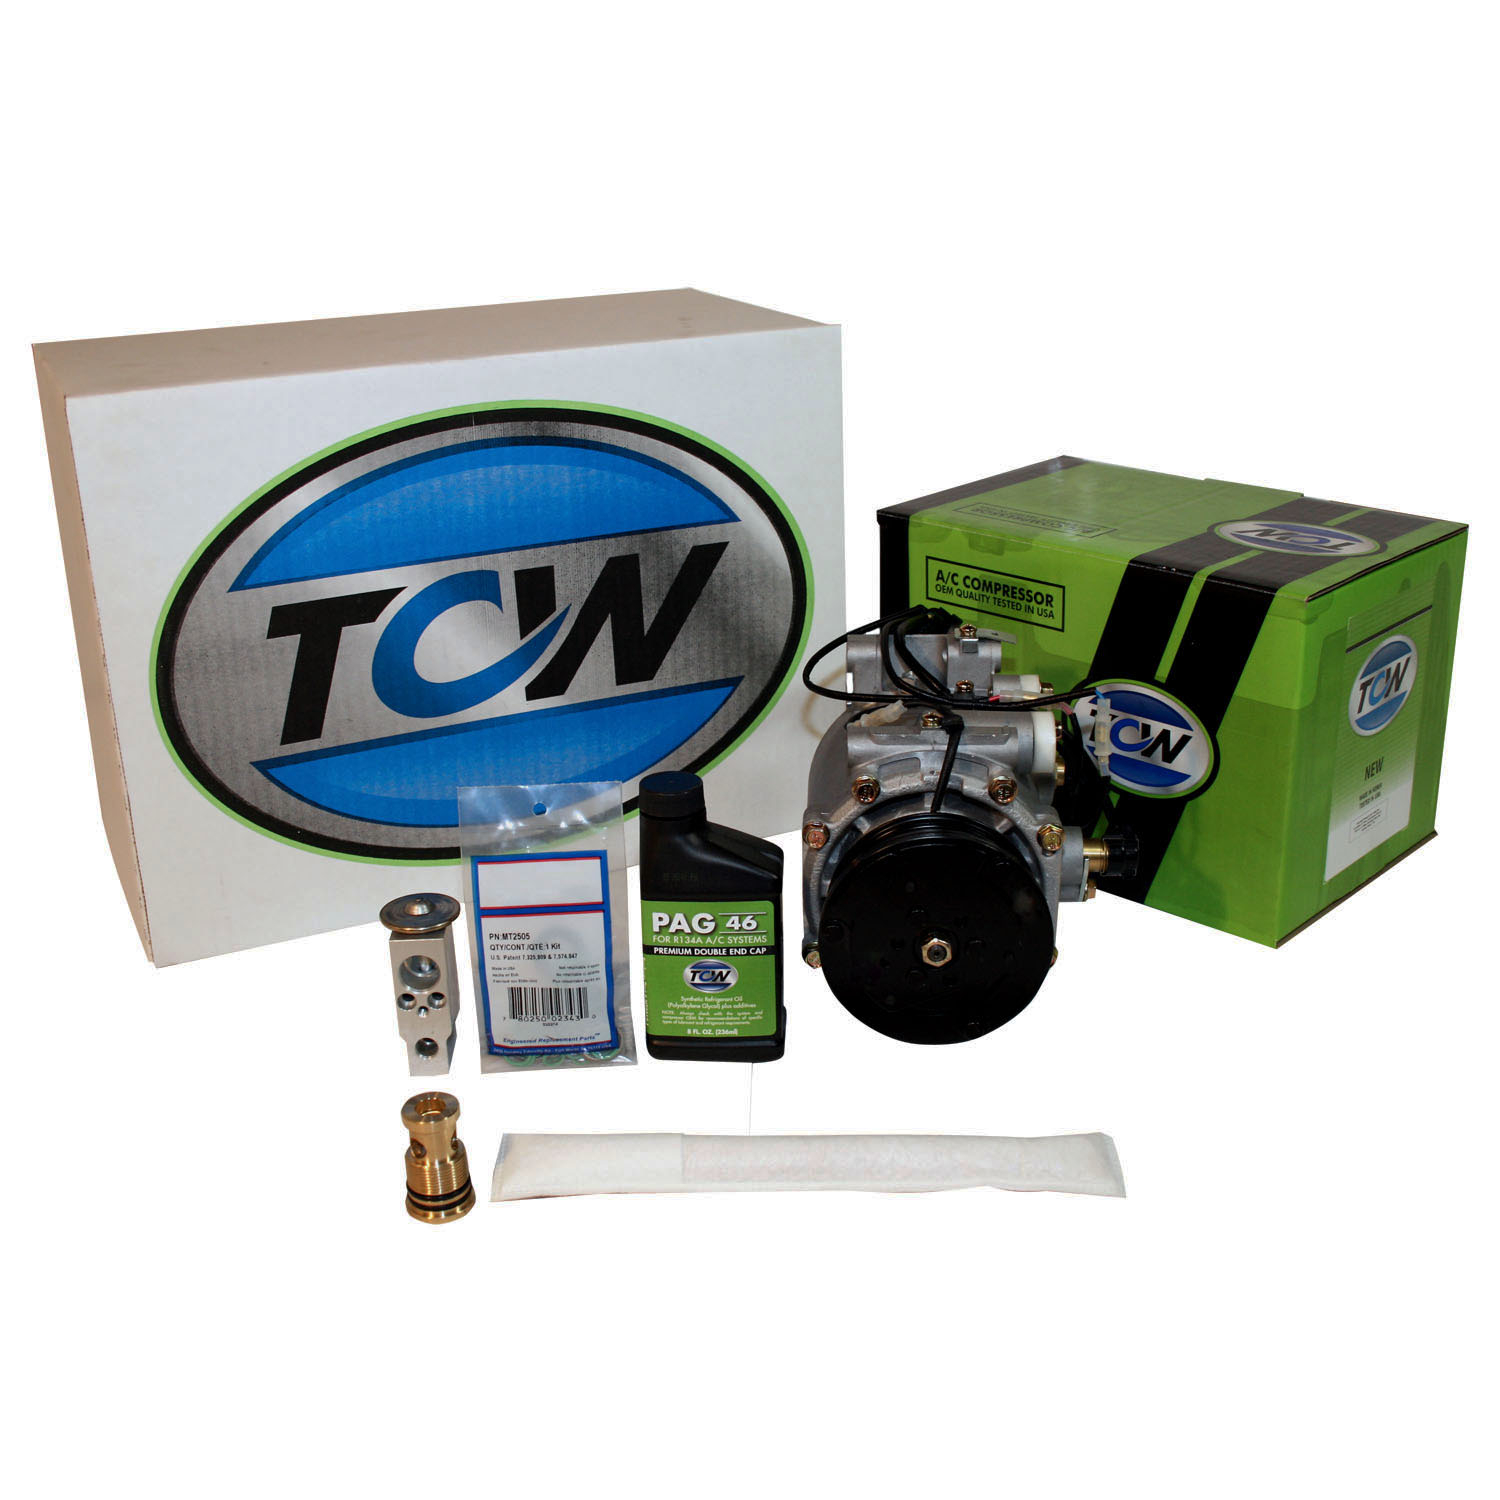 TCW Vehicle A/C Kit K1000218N New Product Image field_60b6a13a6e67c